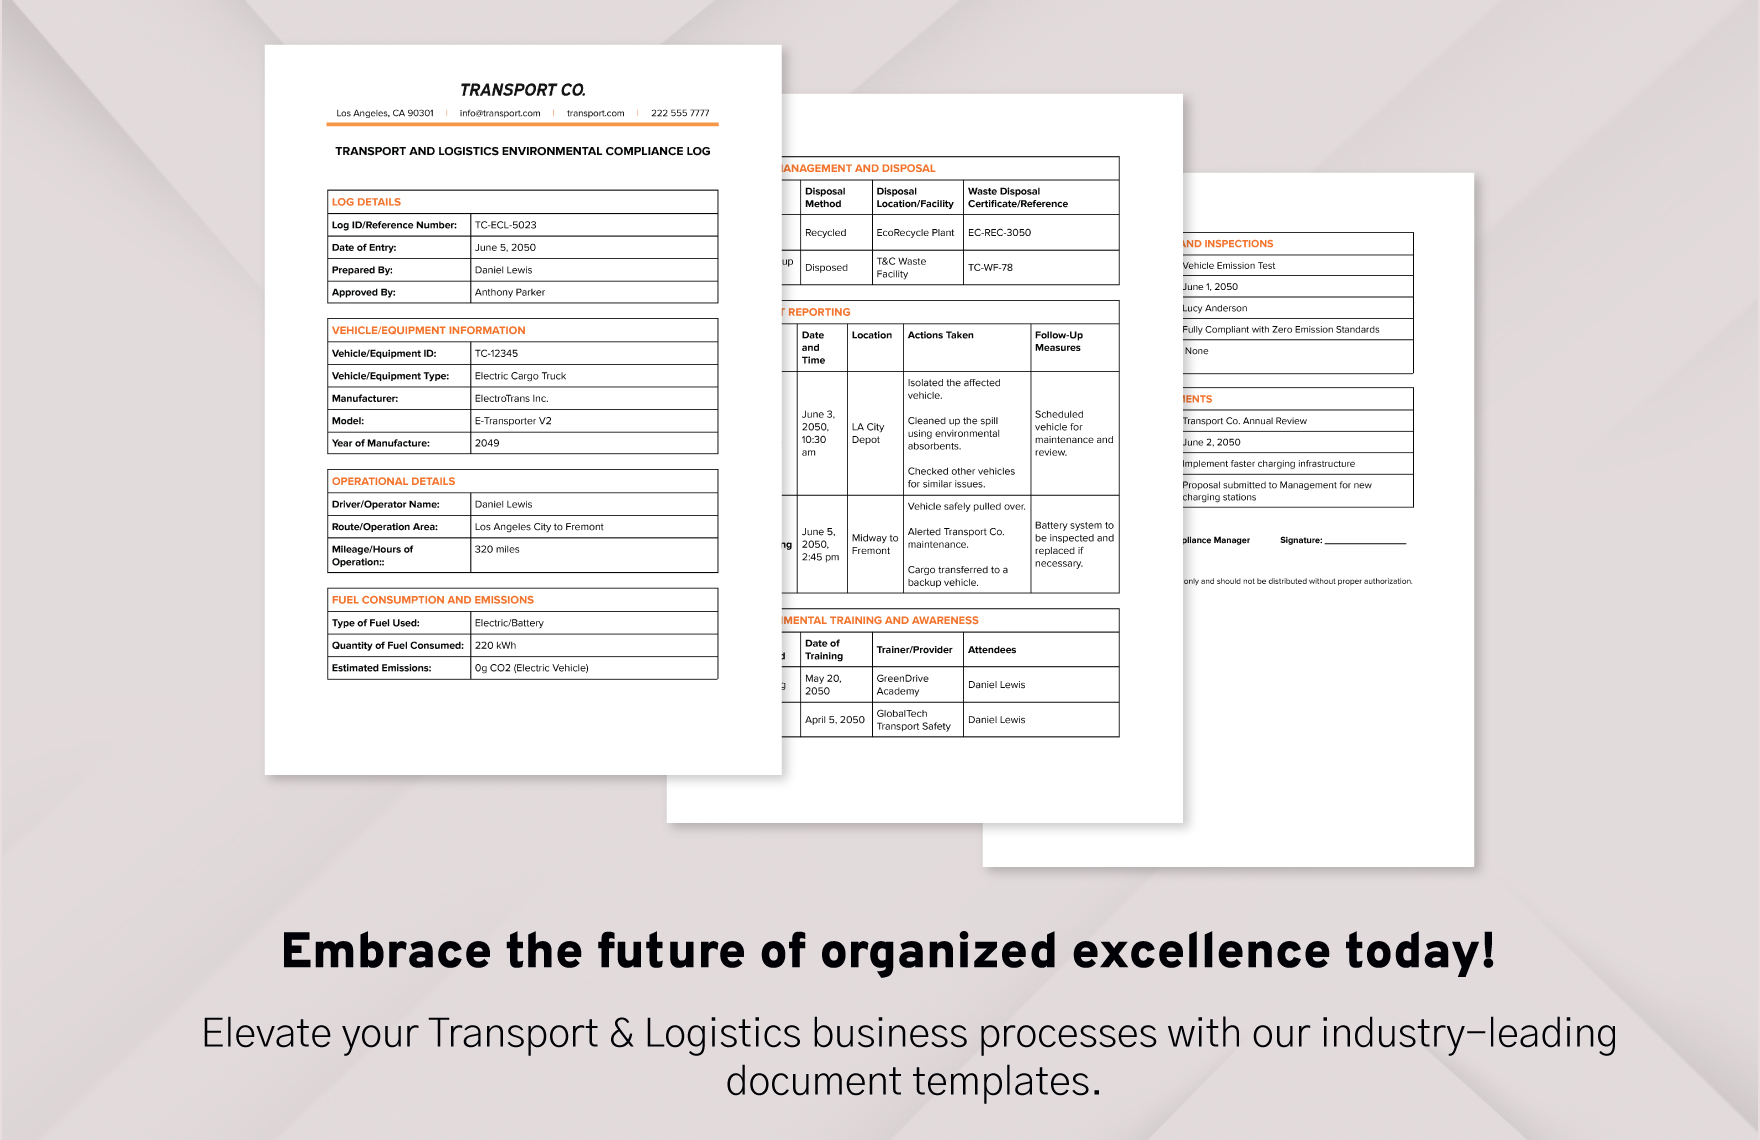 Transport and Logistics Environmental Compliance Log Template